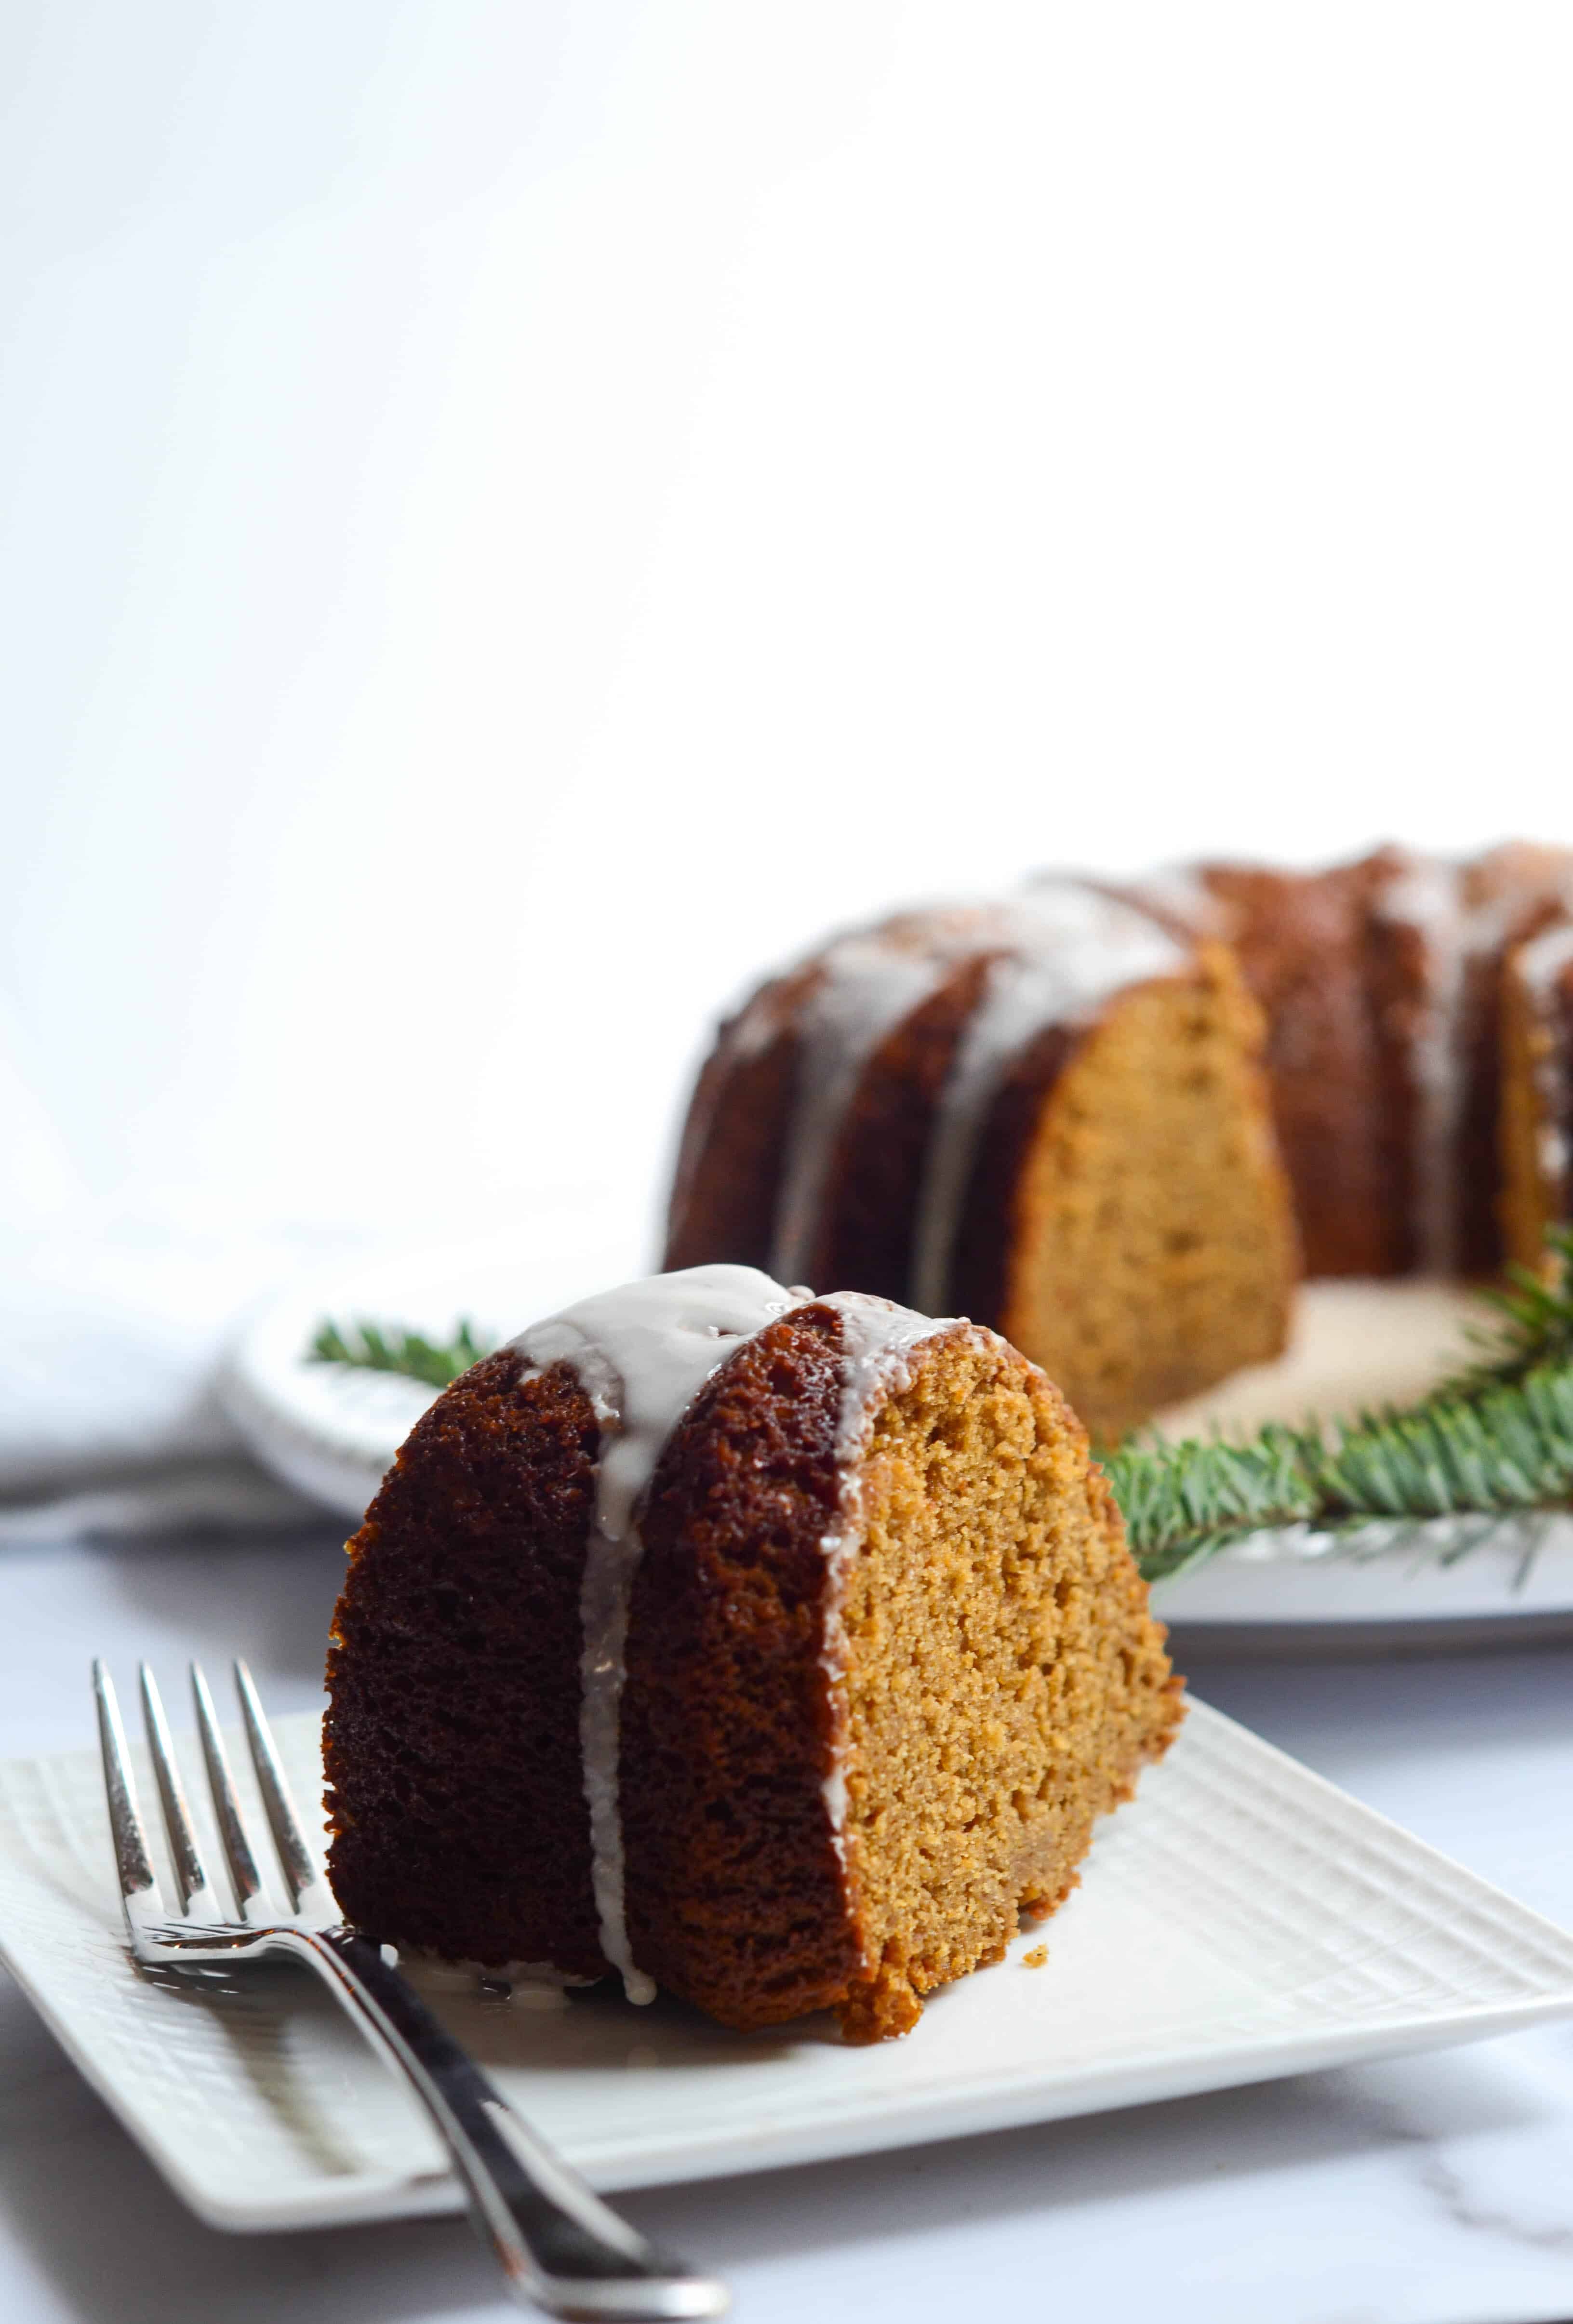 https://wornslapout.com/wp-content/uploads/2019/12/Gingerbread-Bundt-Cake-11.jpg